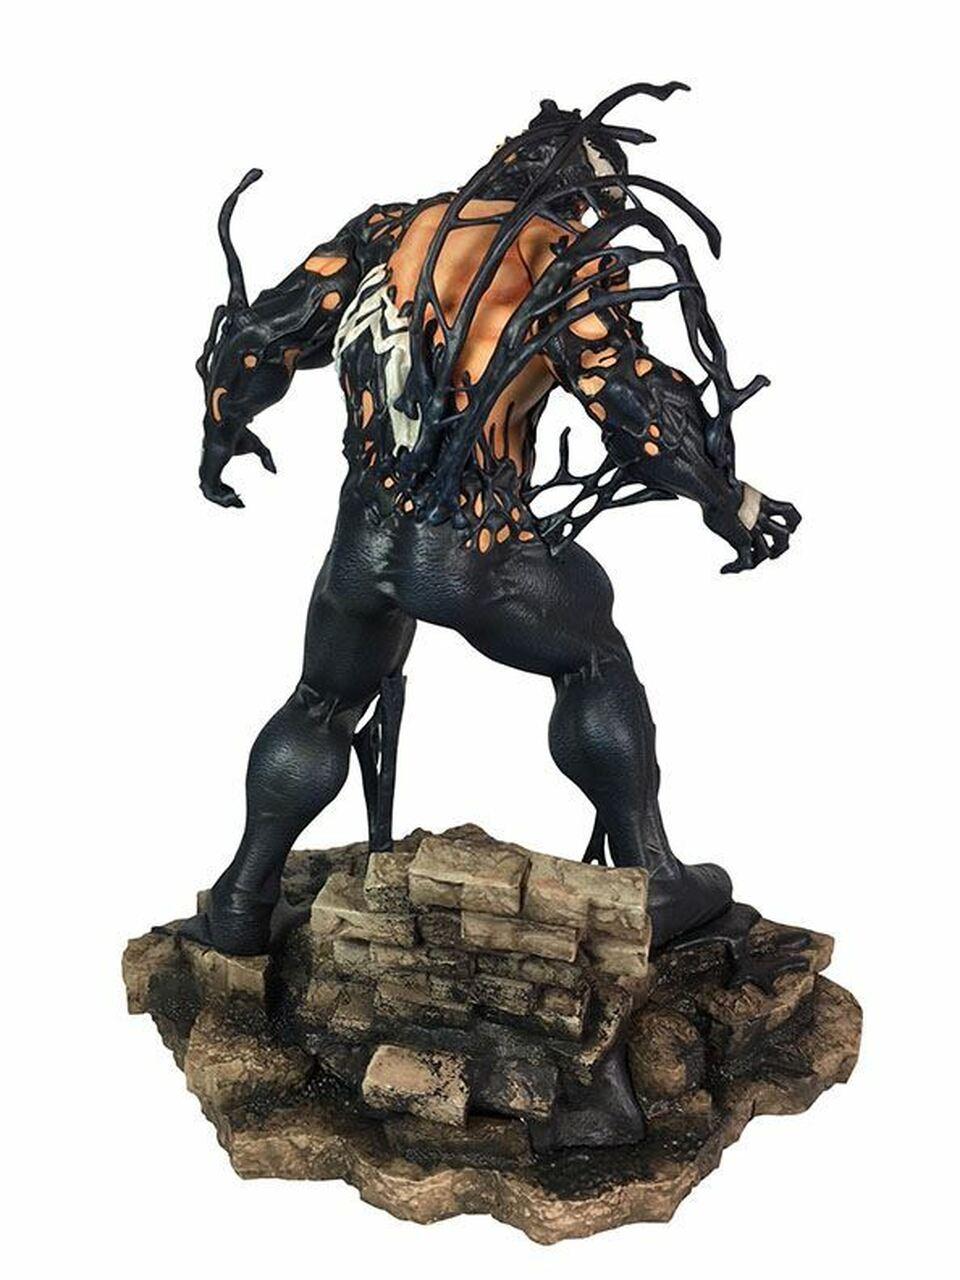 Venom Figura 14P